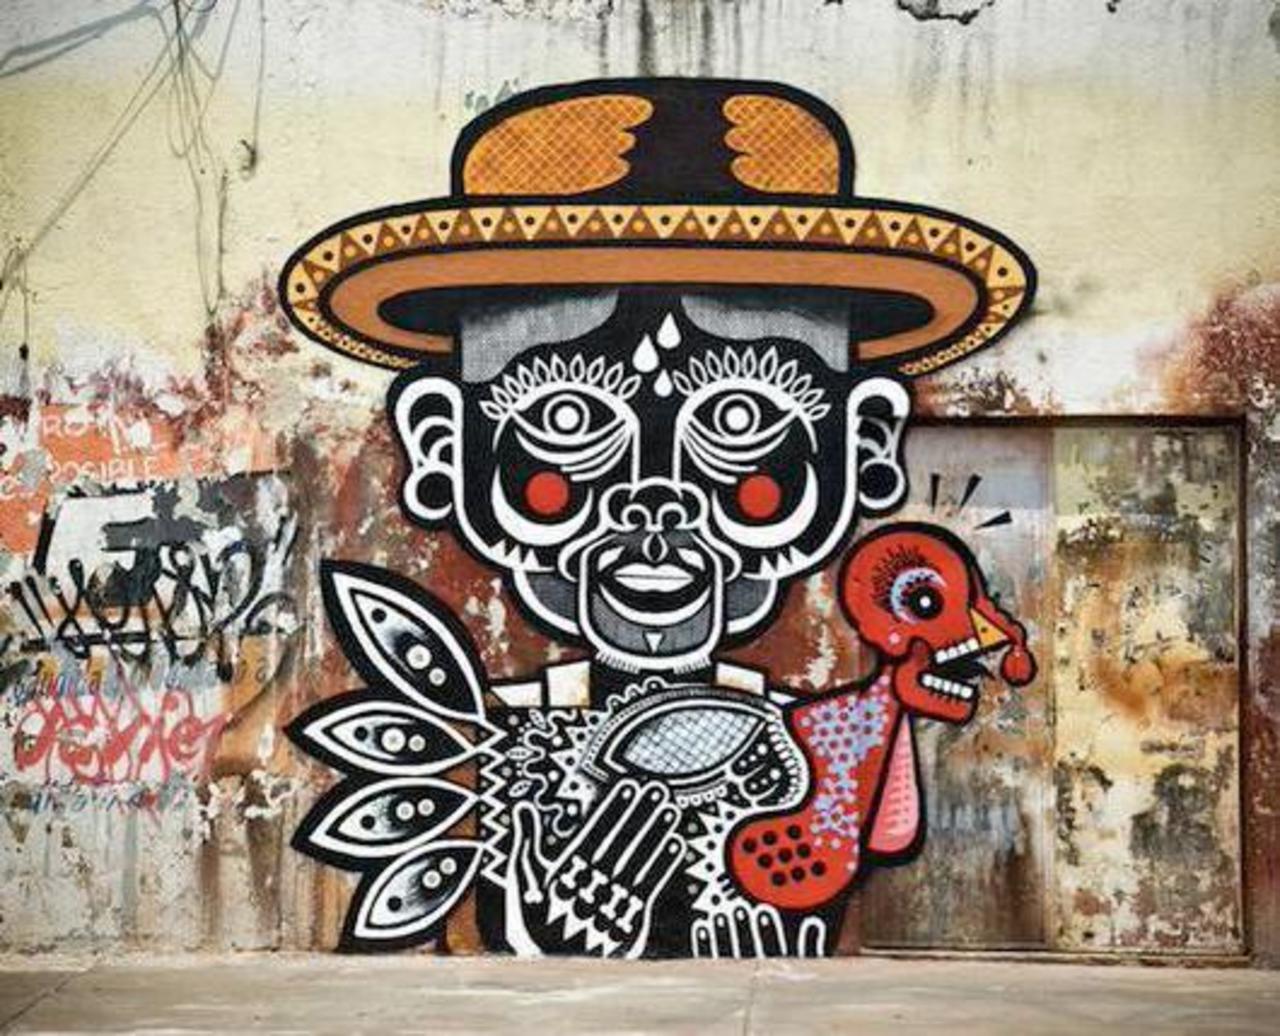 #Streetart by #neuzz in #mexico #switch #bedifferent #graffiti #arte #art http://t.co/5JQgUcjTAL